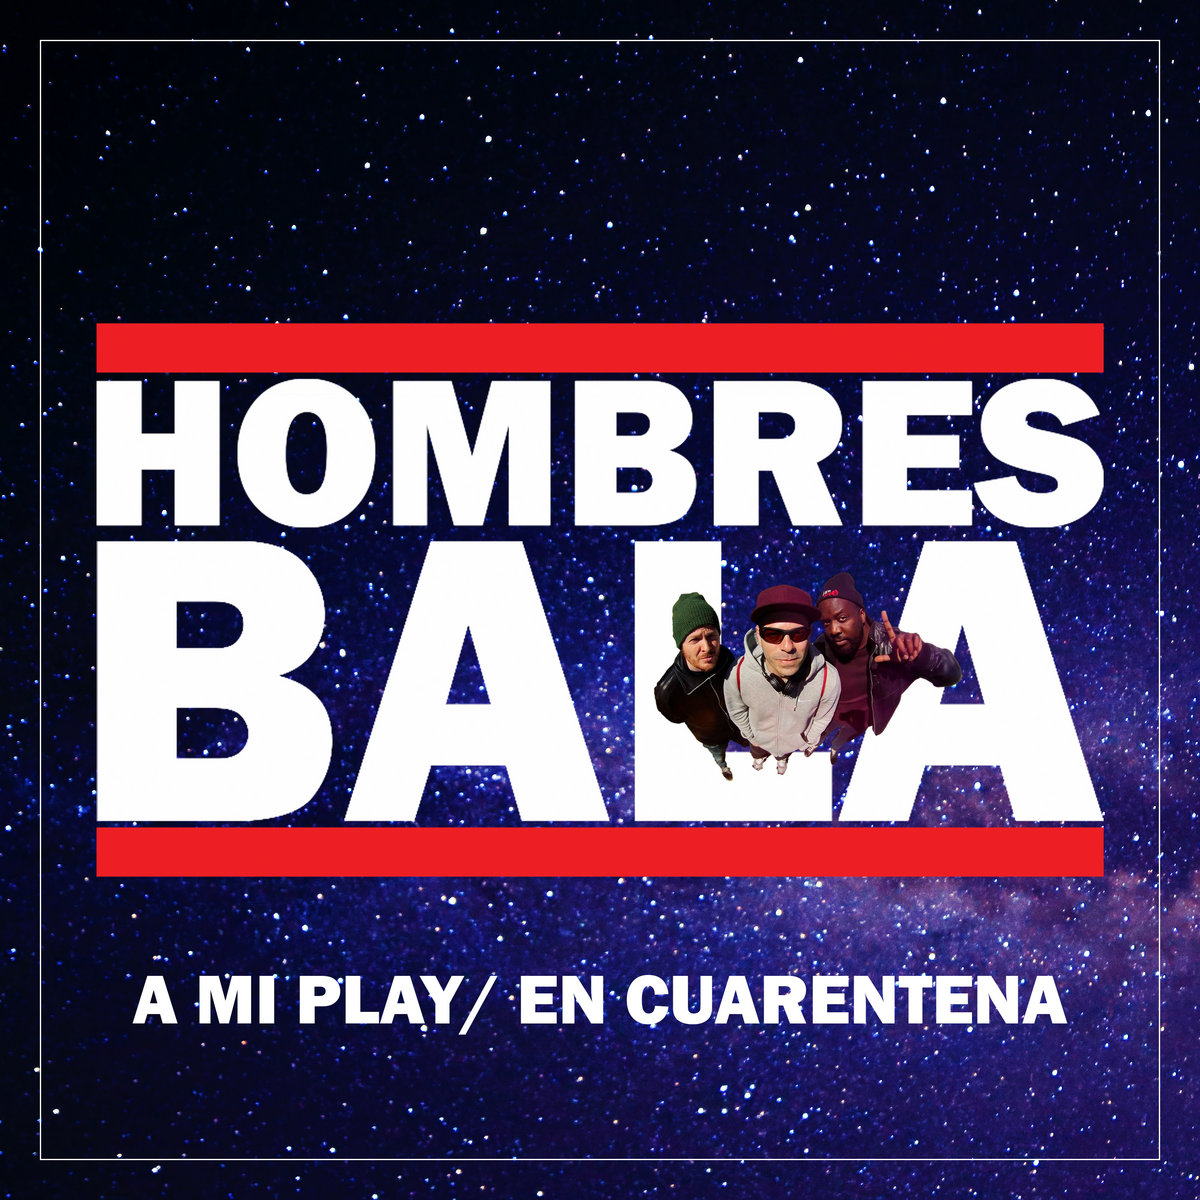 A_mi_play_en_cuarentena_hombres_bala